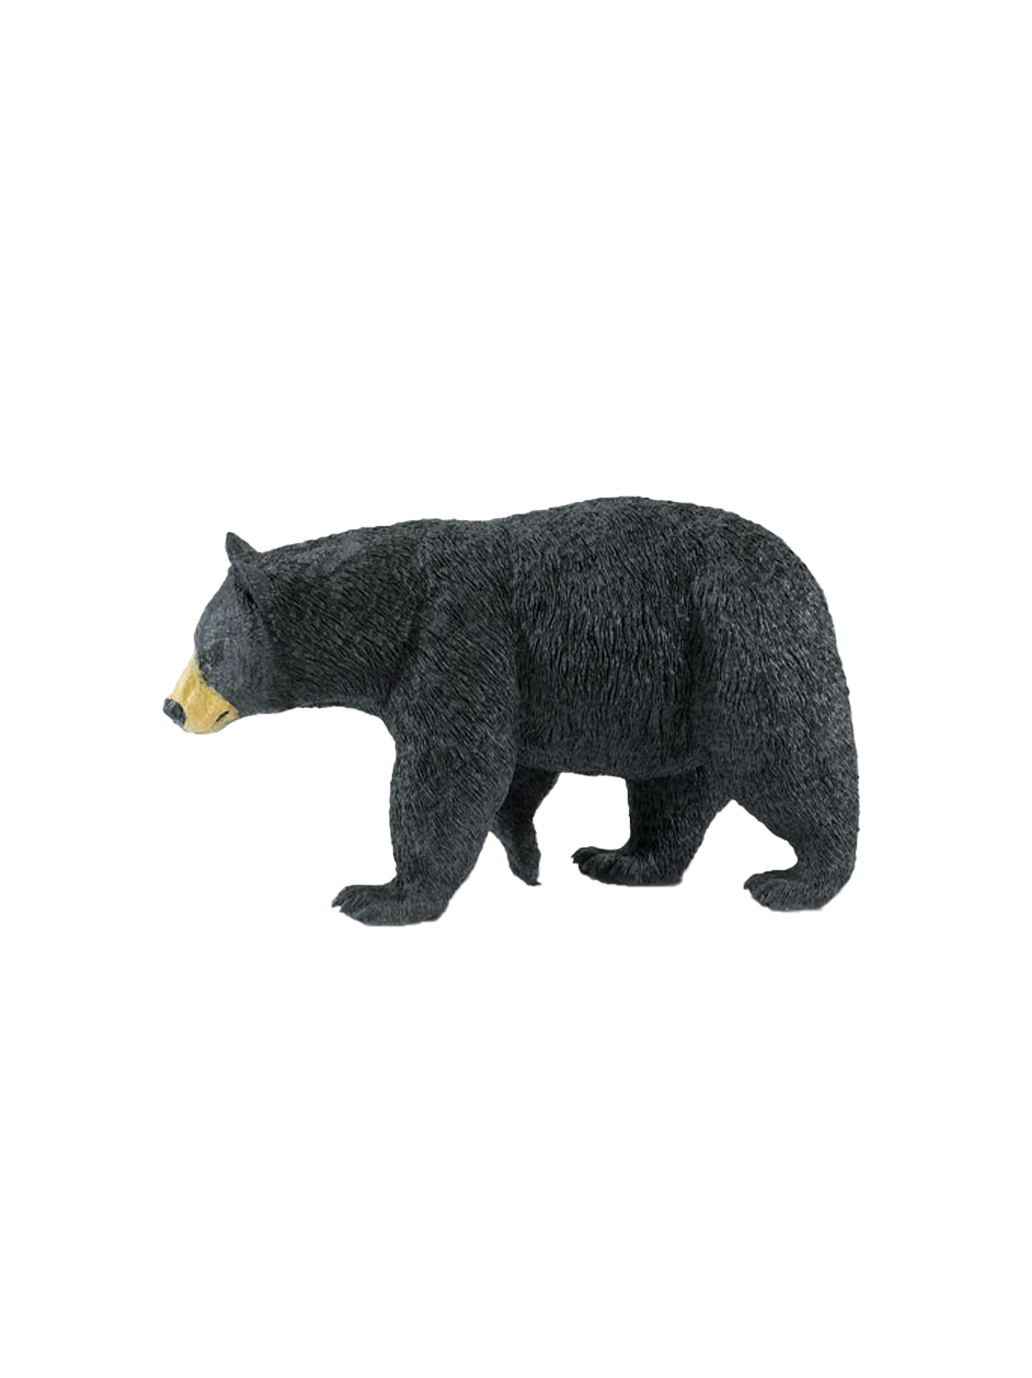 A large figurine of a black bear